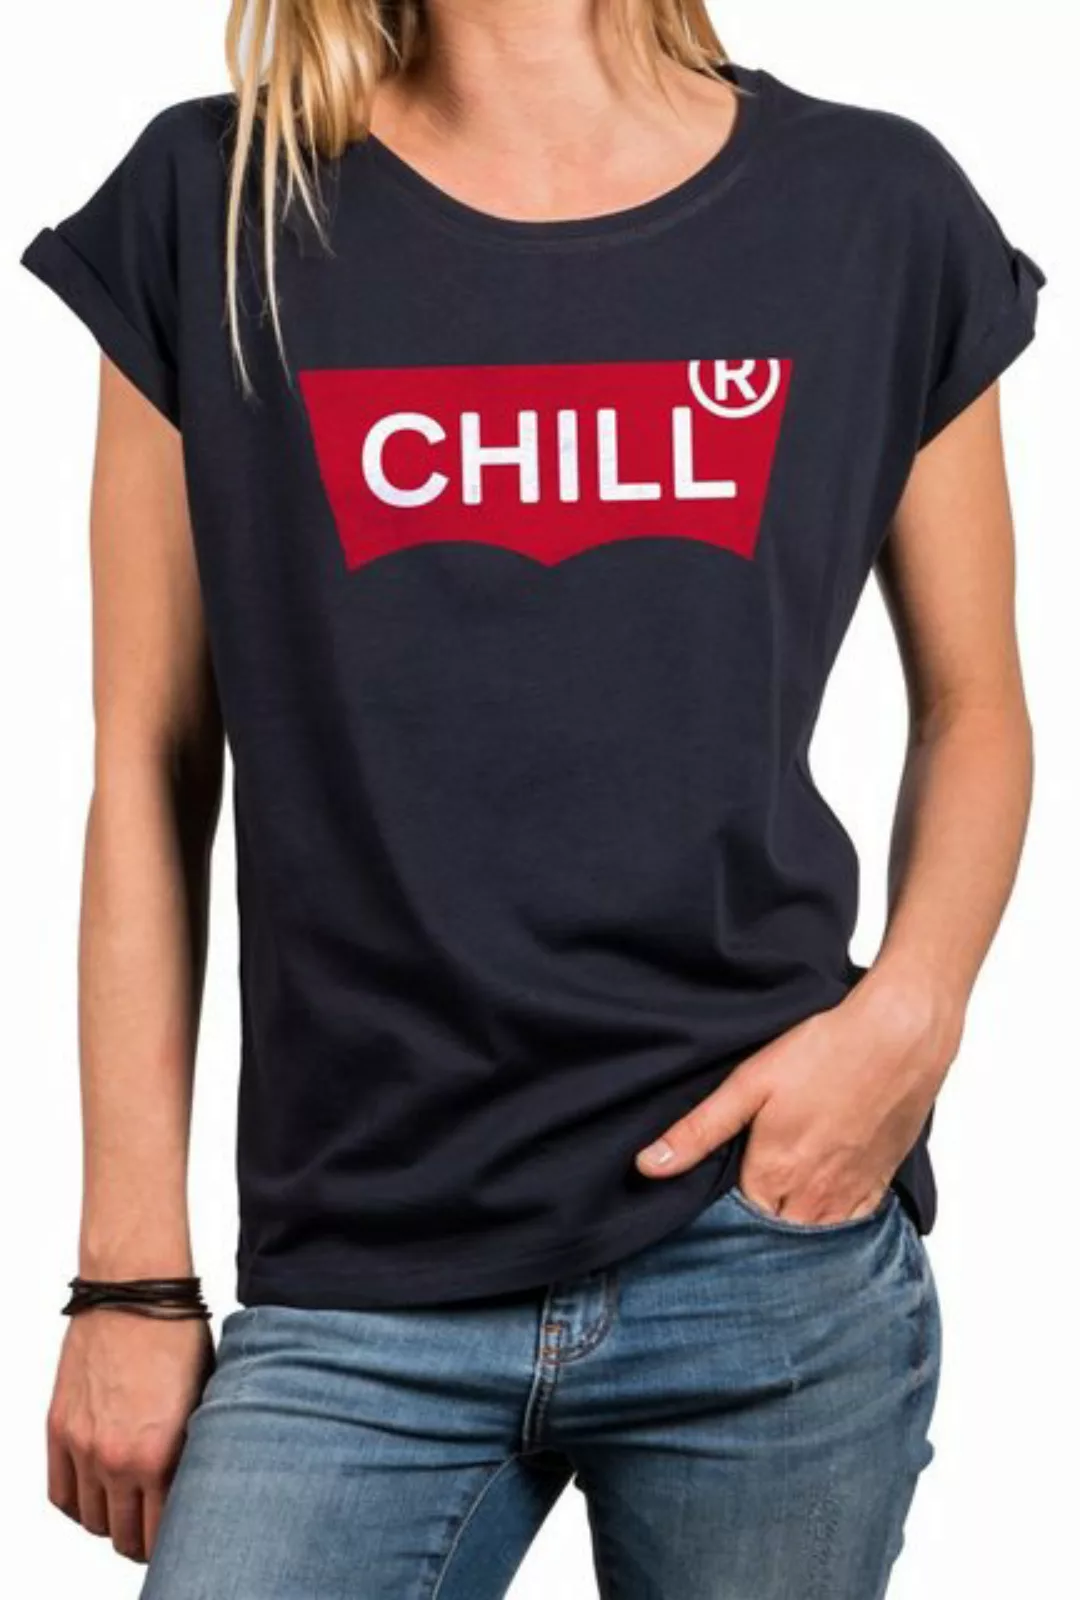 MAKAYA Print-Shirt Damen Kurzarm Sommer Top Aufdruck Chill Motiv Modern Ove günstig online kaufen